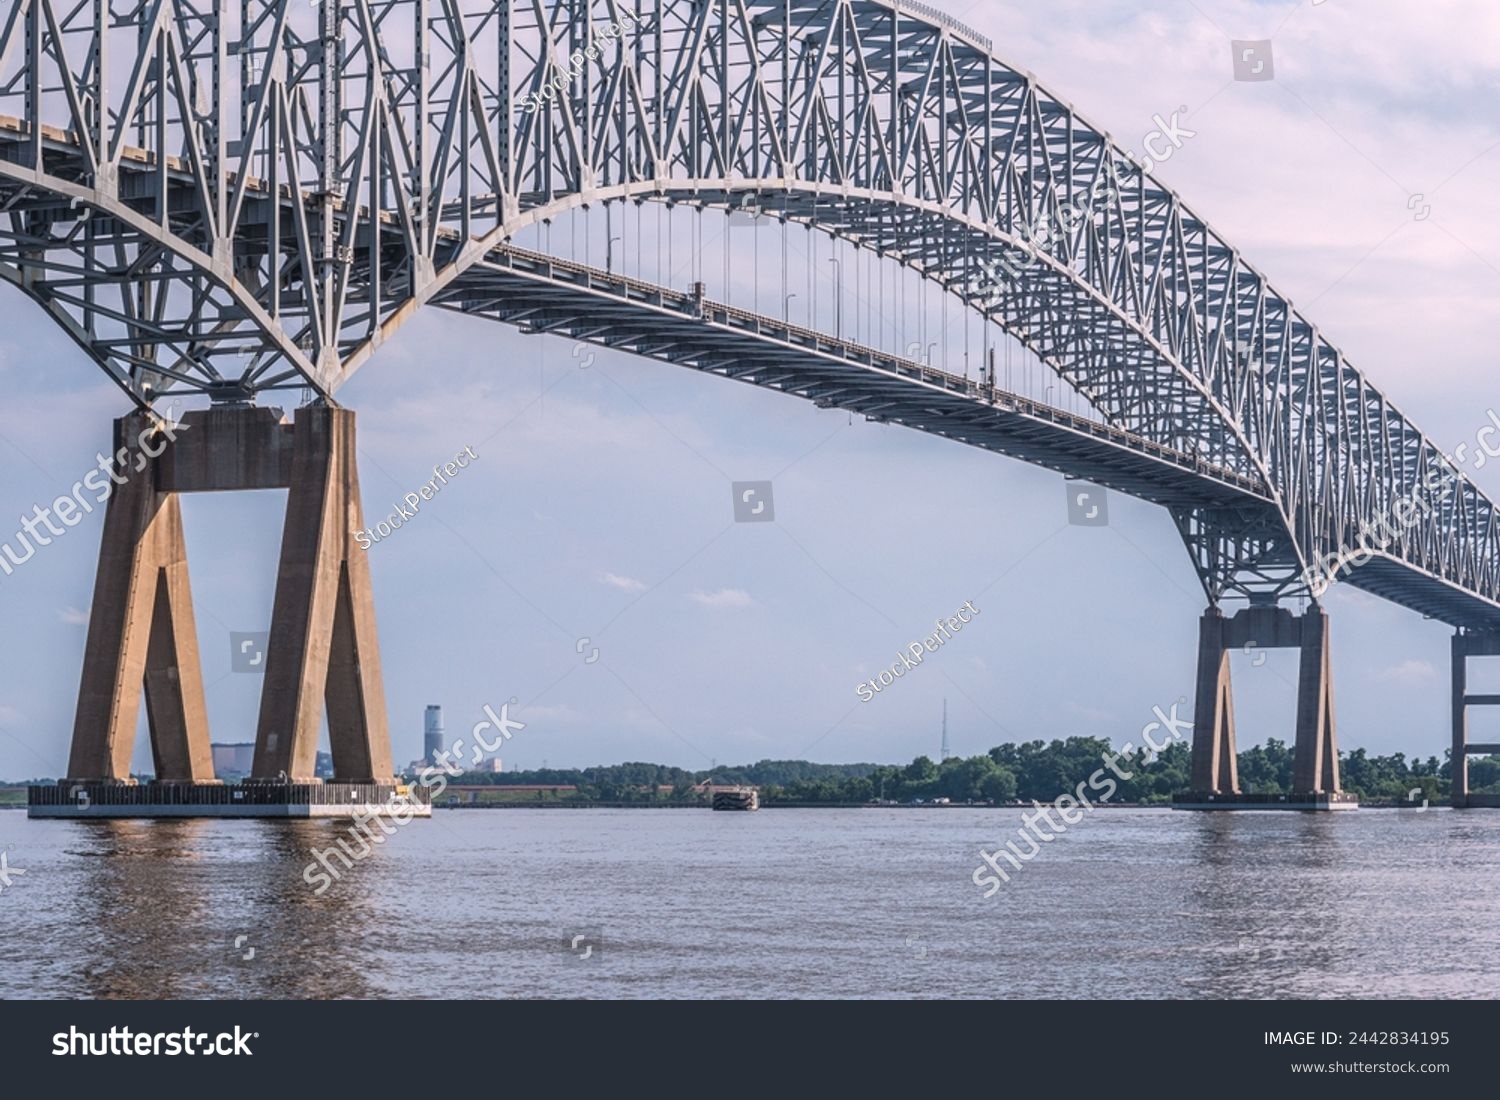 Francis Scott Key Bridge - Baltimore, Maryland USA #2442834195